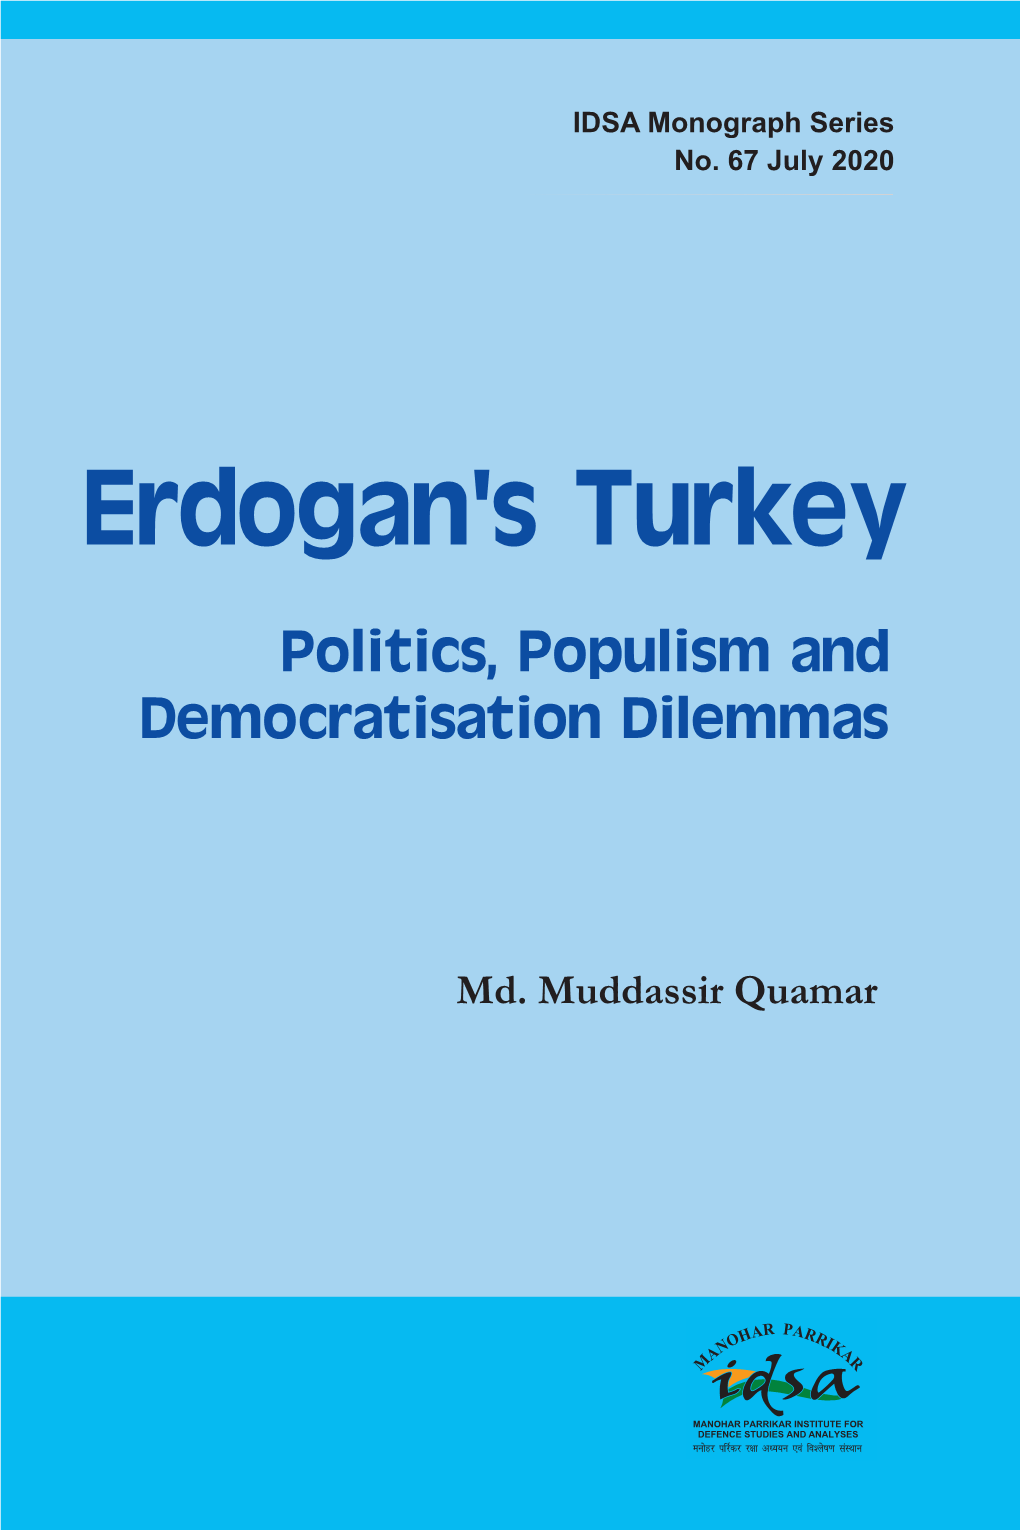 Erdogan's Turkey Politics, Populism and Democratisation Dilemmas